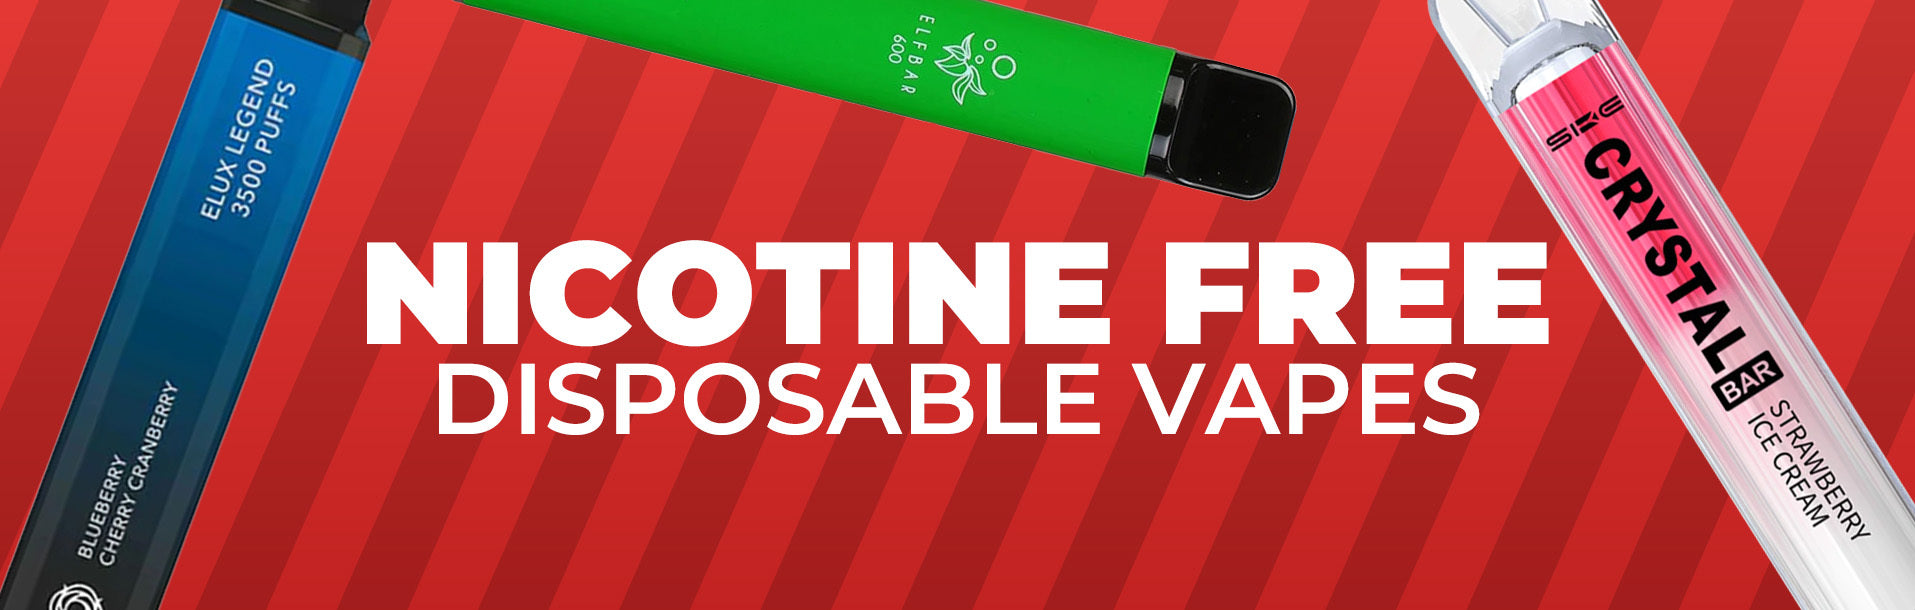 Nicotine Free Disposable Vapes